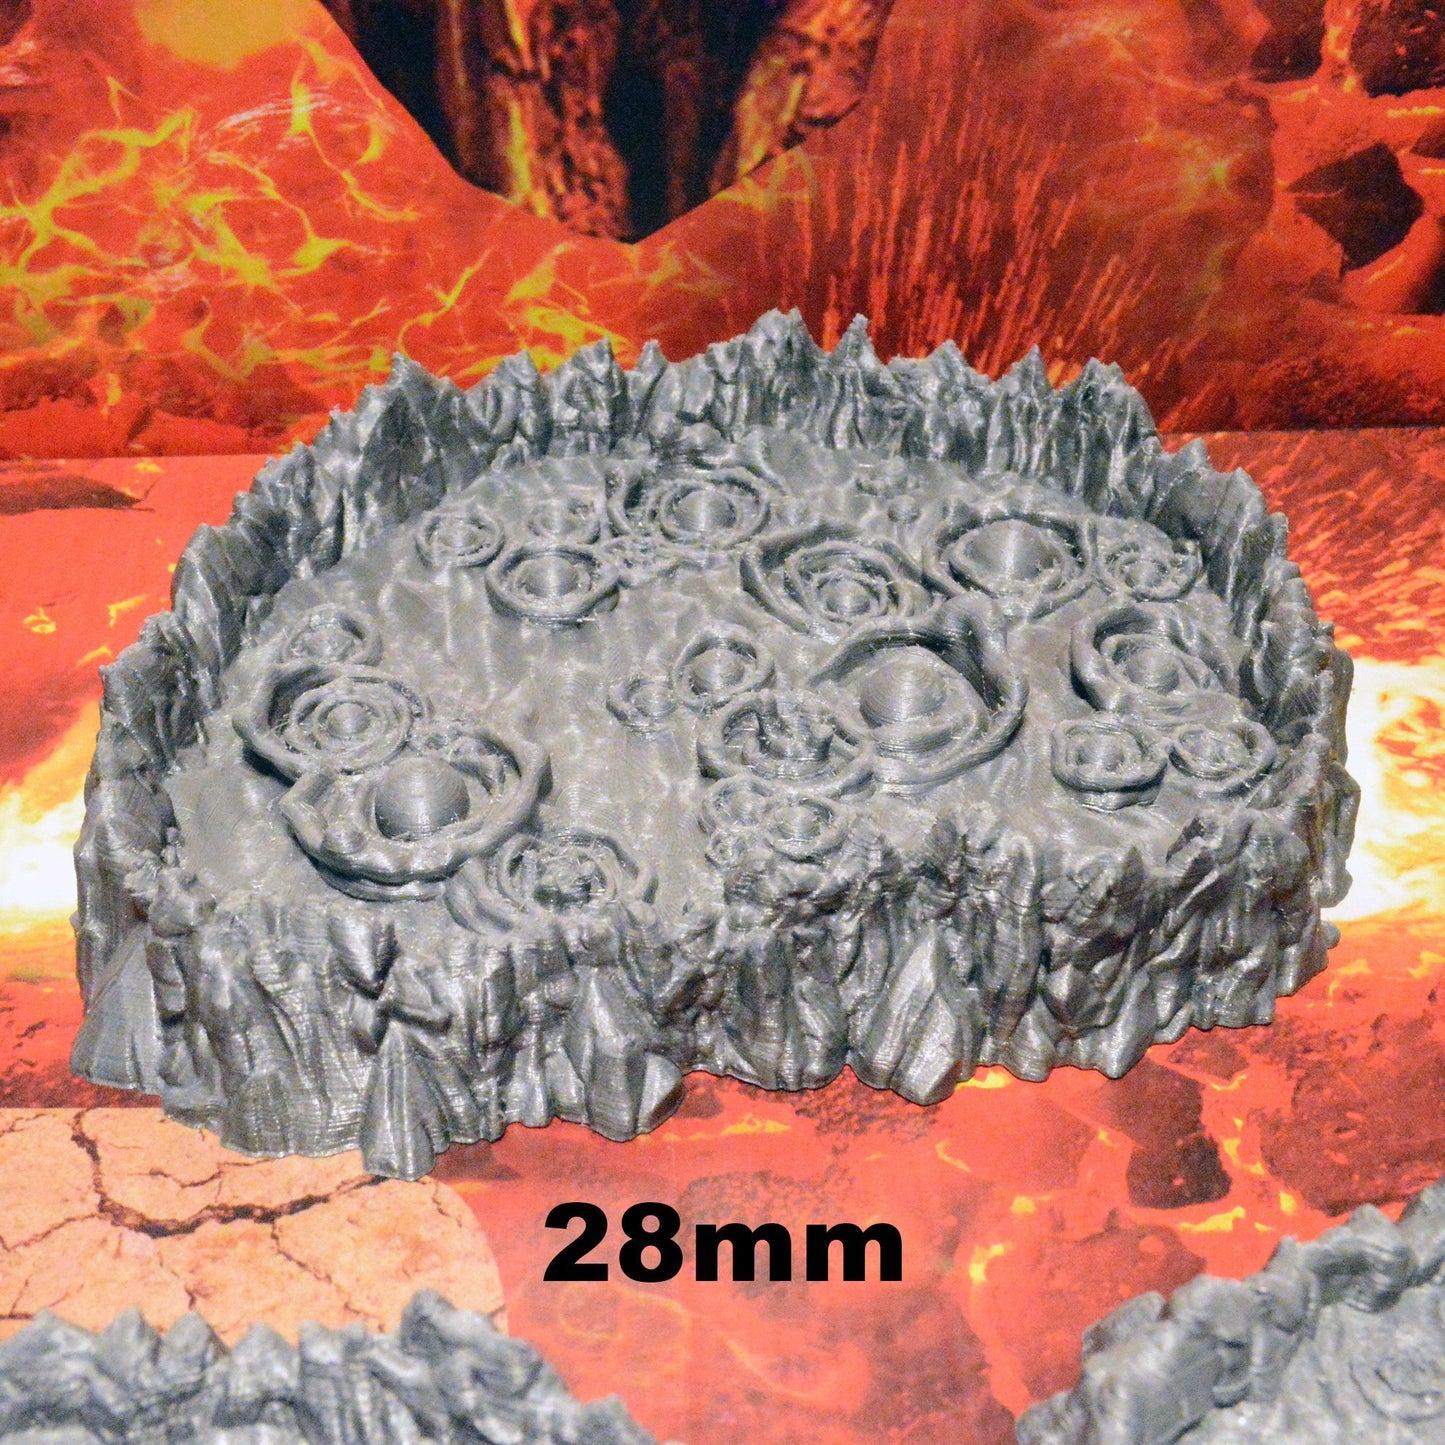 Burbling Lava Pits 15mm 28mm for D&D Terrain, Fire Molten Magma for DnD Pathfinder Wargame Skirmish Demon Terrain